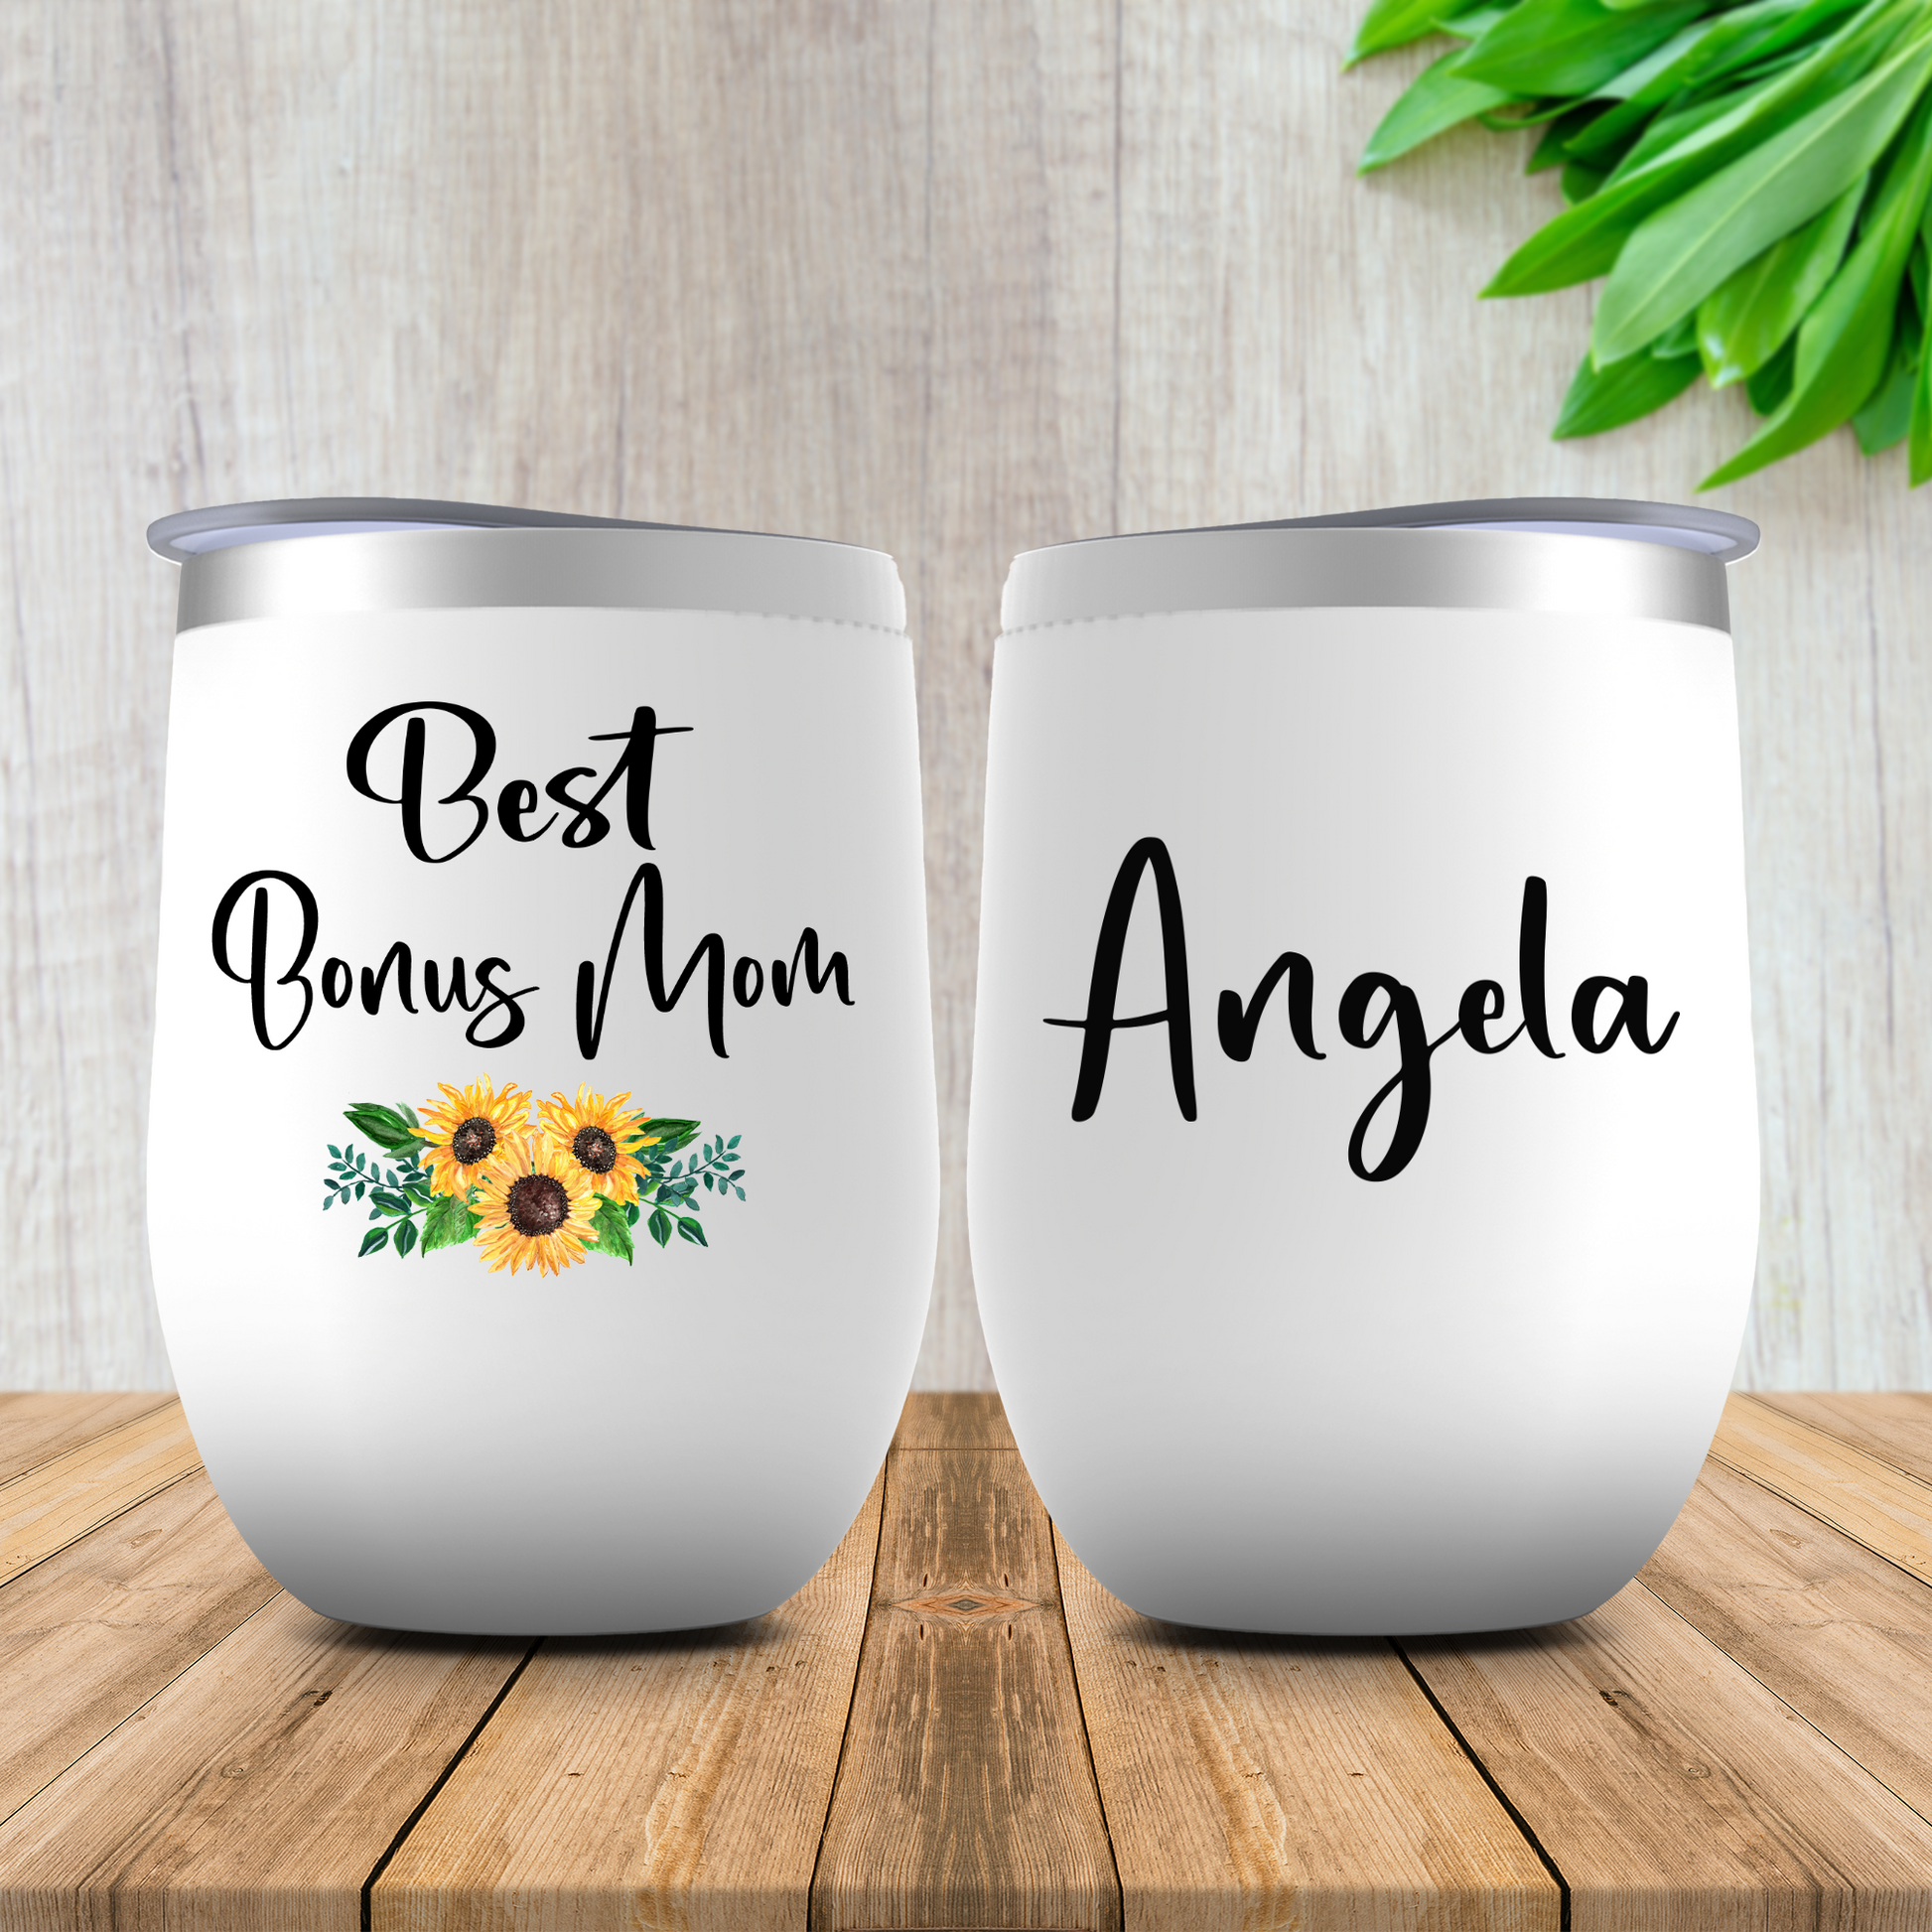 Bonus Mom Personalized 12 oz. Double-Wall Ceramic Travel Mug